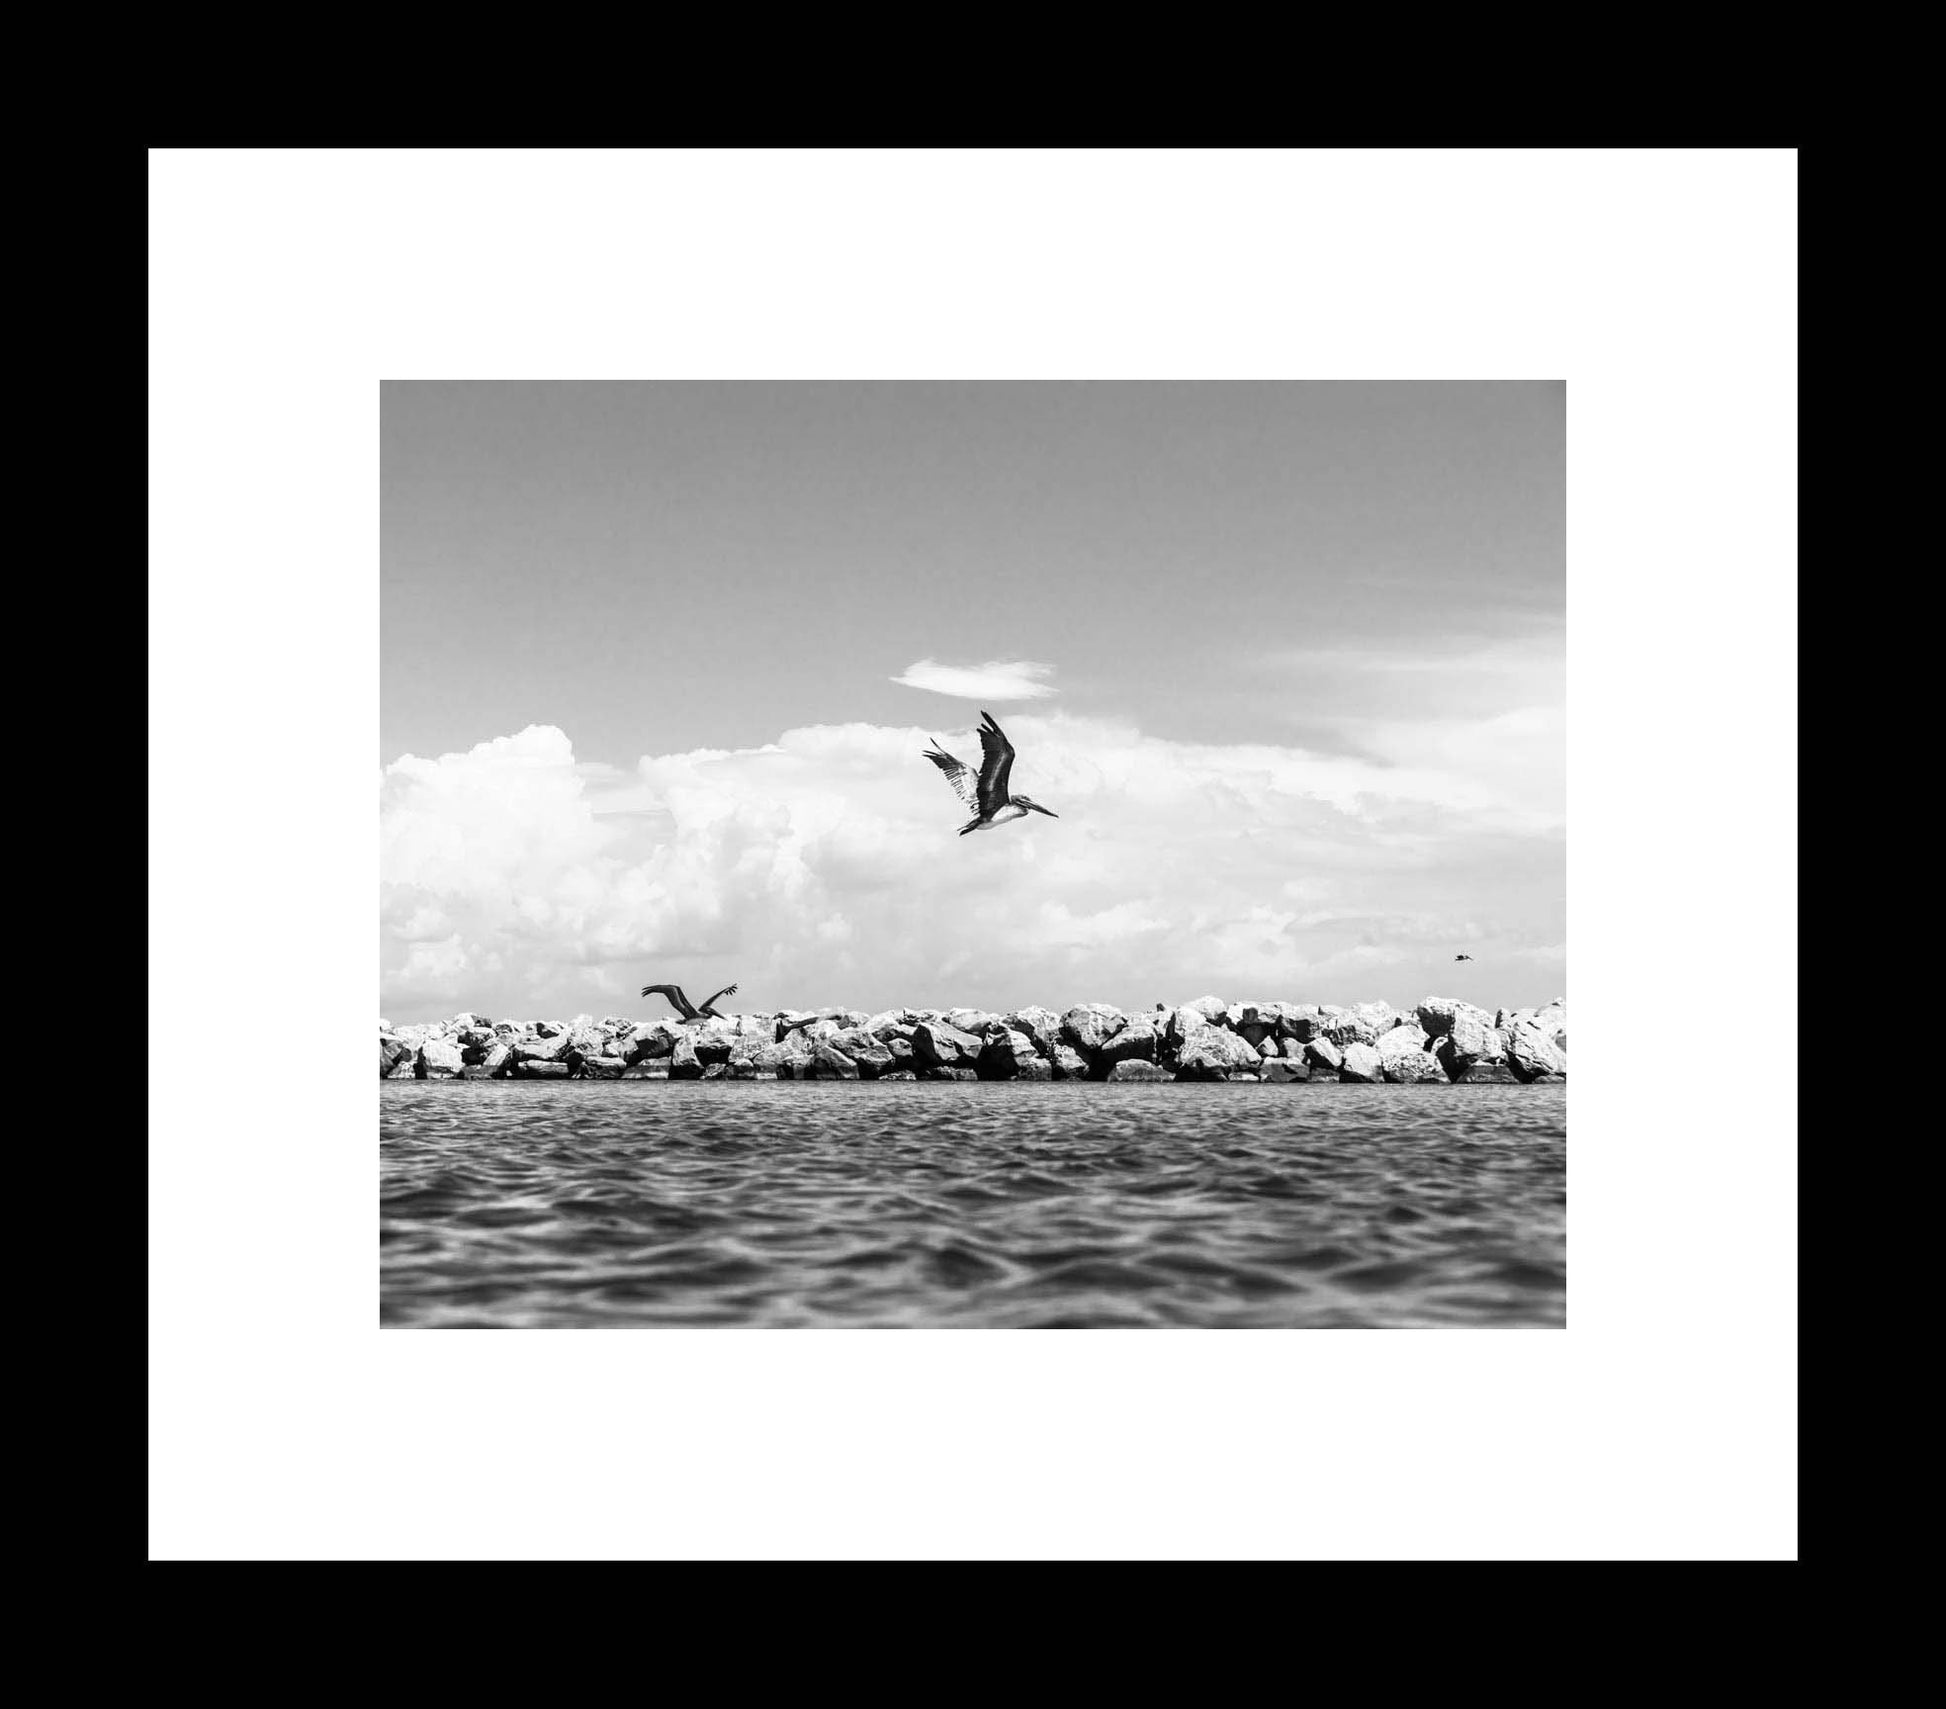 Black and White, Beach Landscape Photography Print, Coastal Art, Pelicans in Flight, St Andrews State Park Jetty, Bird Prints - eireanneilis